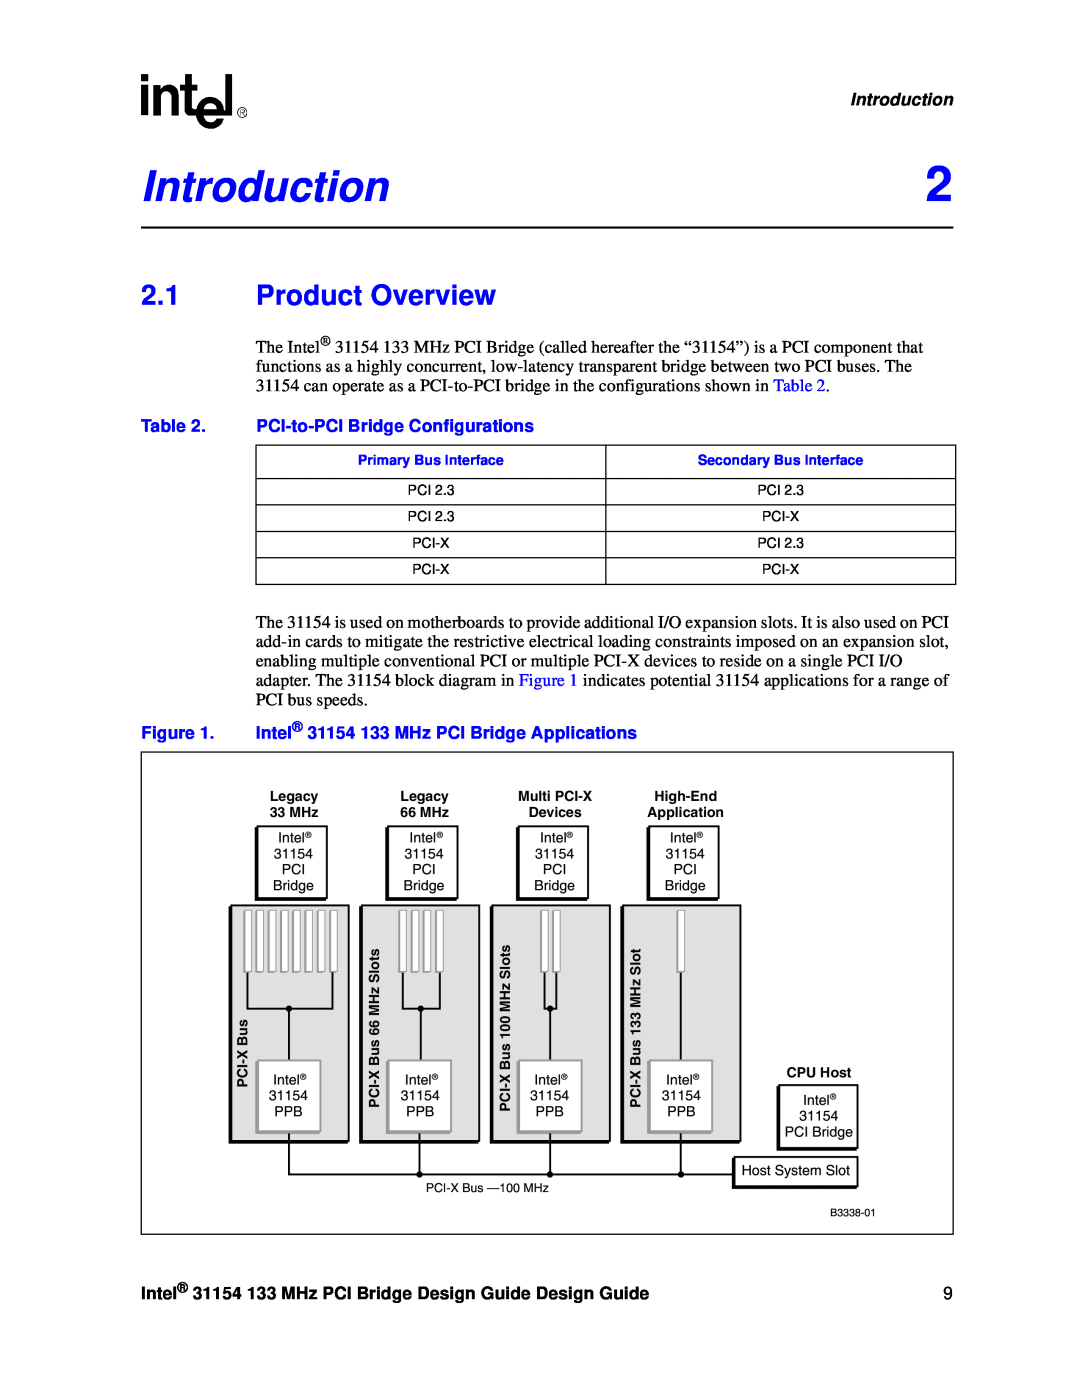 Intel Introduction2, Product Overview, PCI-to-PCI Bridge Configurations, Intel 31154 133 MHz PCI Bridge Applications 